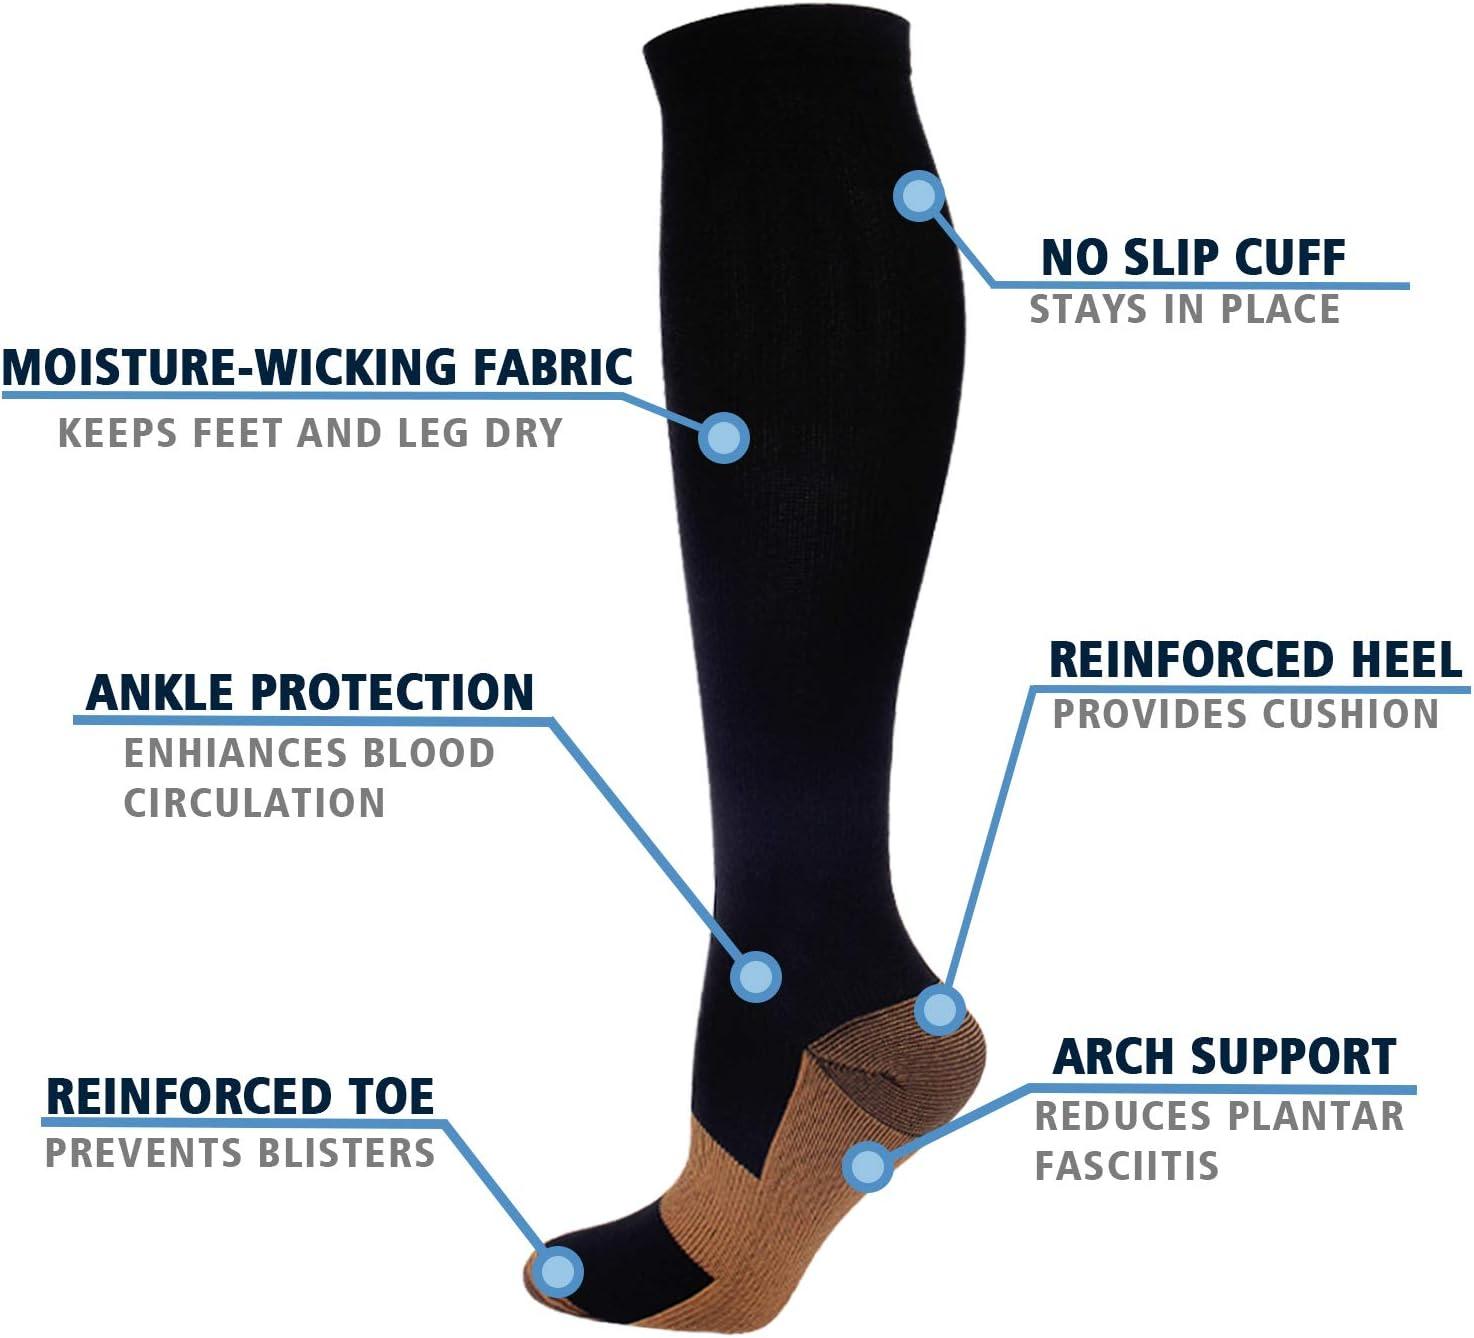  7 Pairs Copper Compression Socks For Men Women 20-30 mmHg  Knee High Stockings